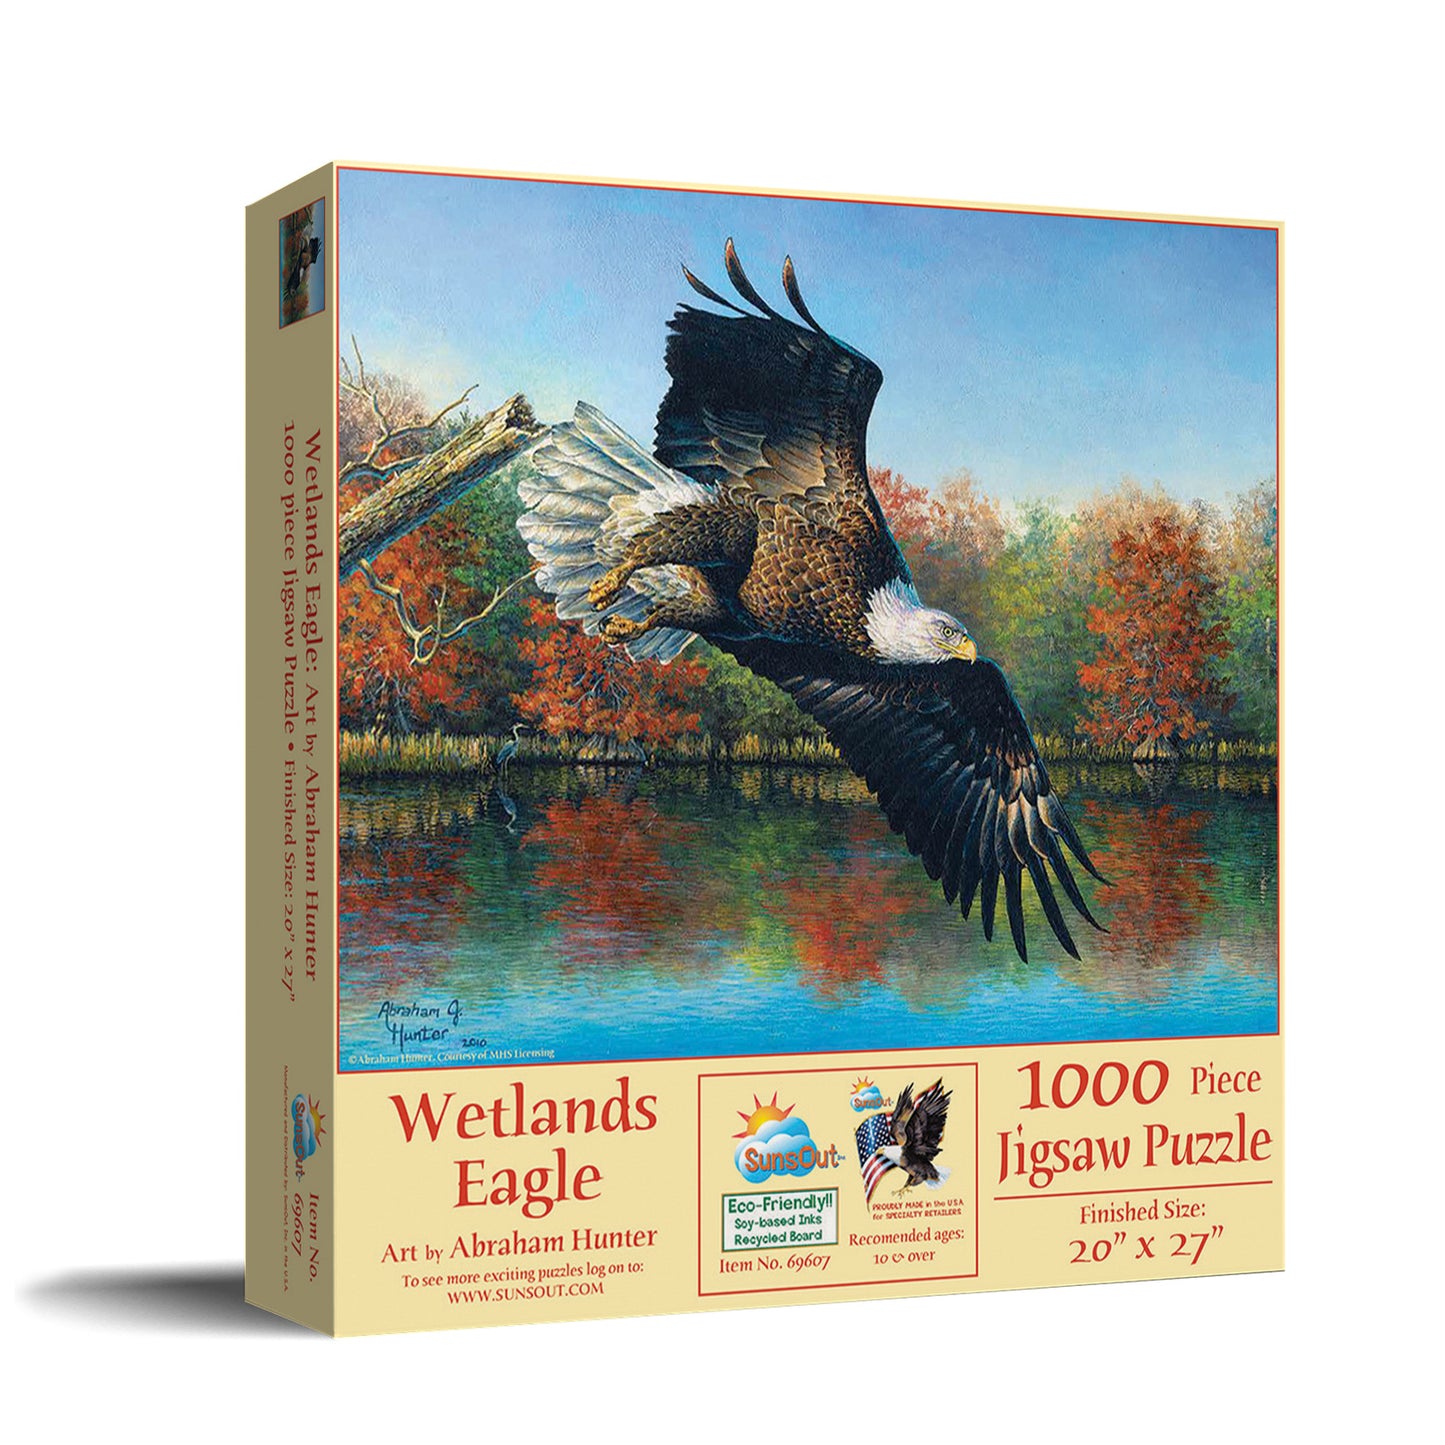 Wetlands Eagle - 1000 Piece Jigsaw Puzzle